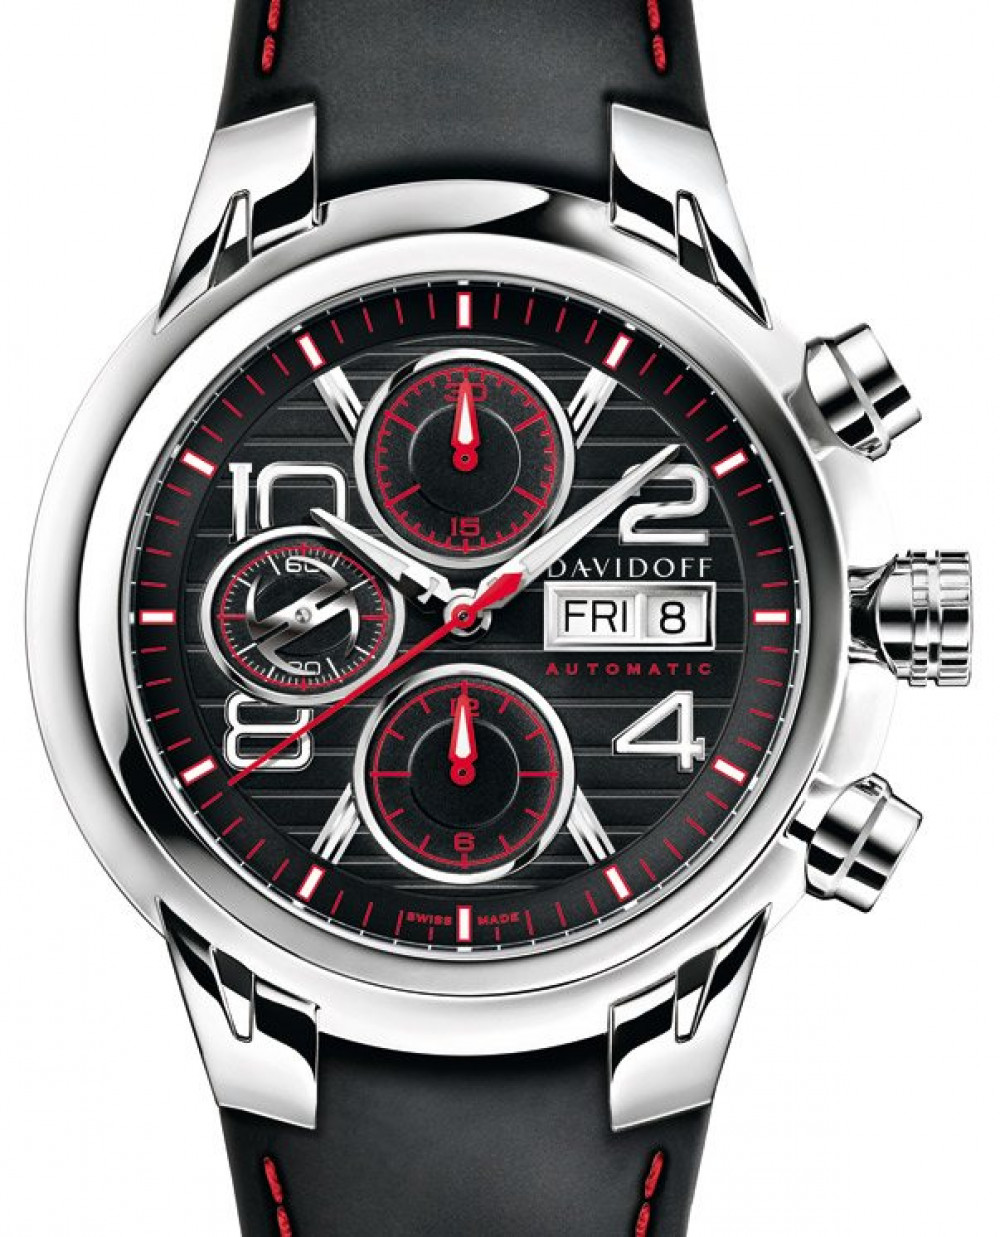 Zegarek firmy Davidoff, model Velero Chronograph Sportive Design